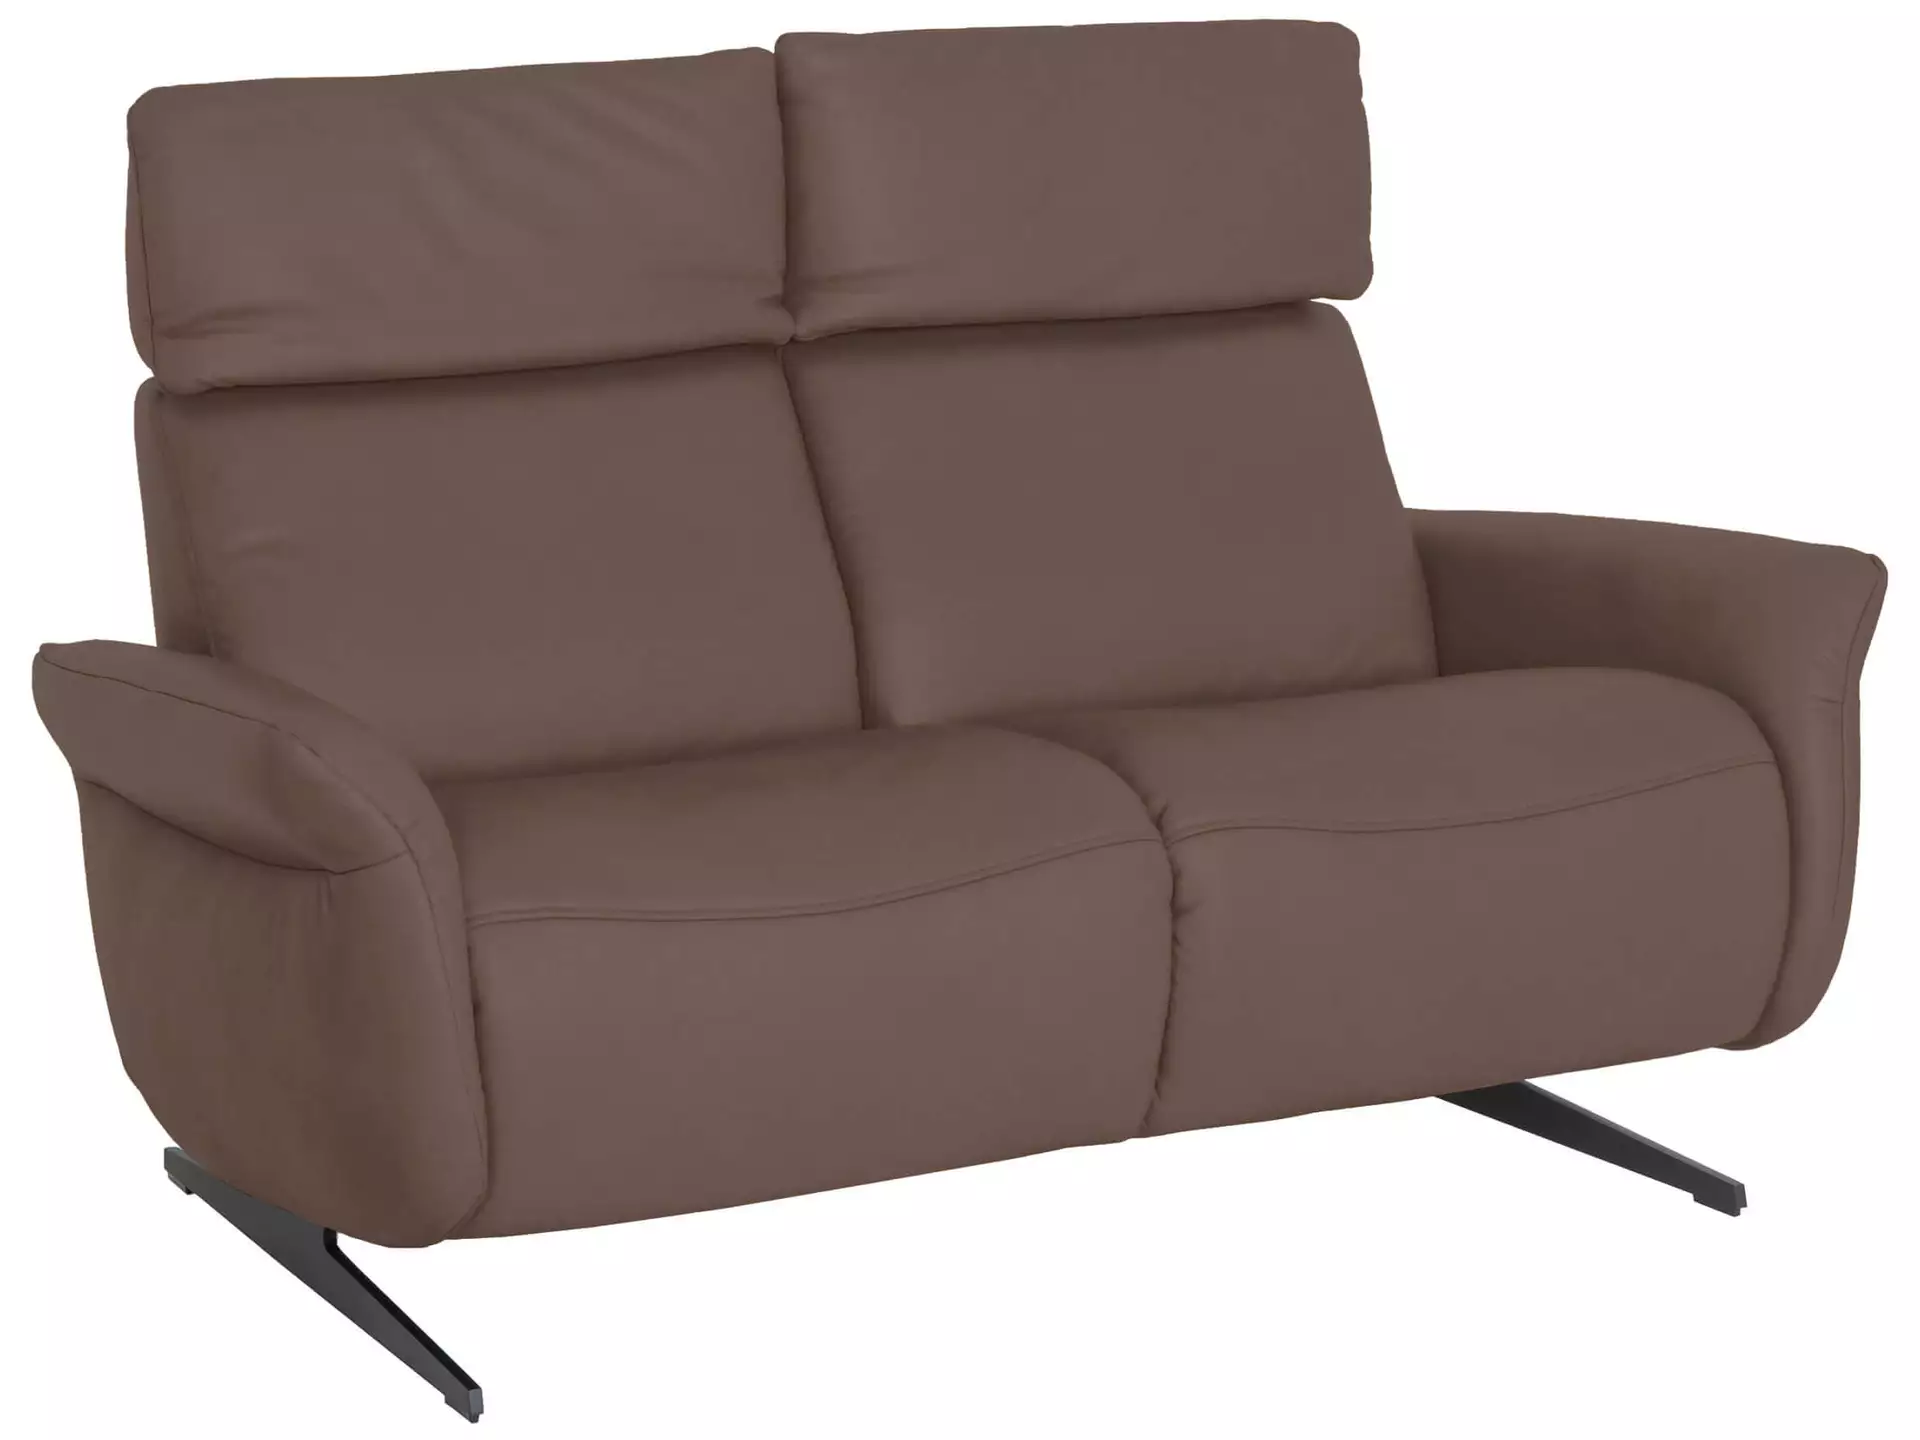 Sofa Patricia Basic B: 149 cm Himolla / Farbe: Canyon / Material: Leder Basic